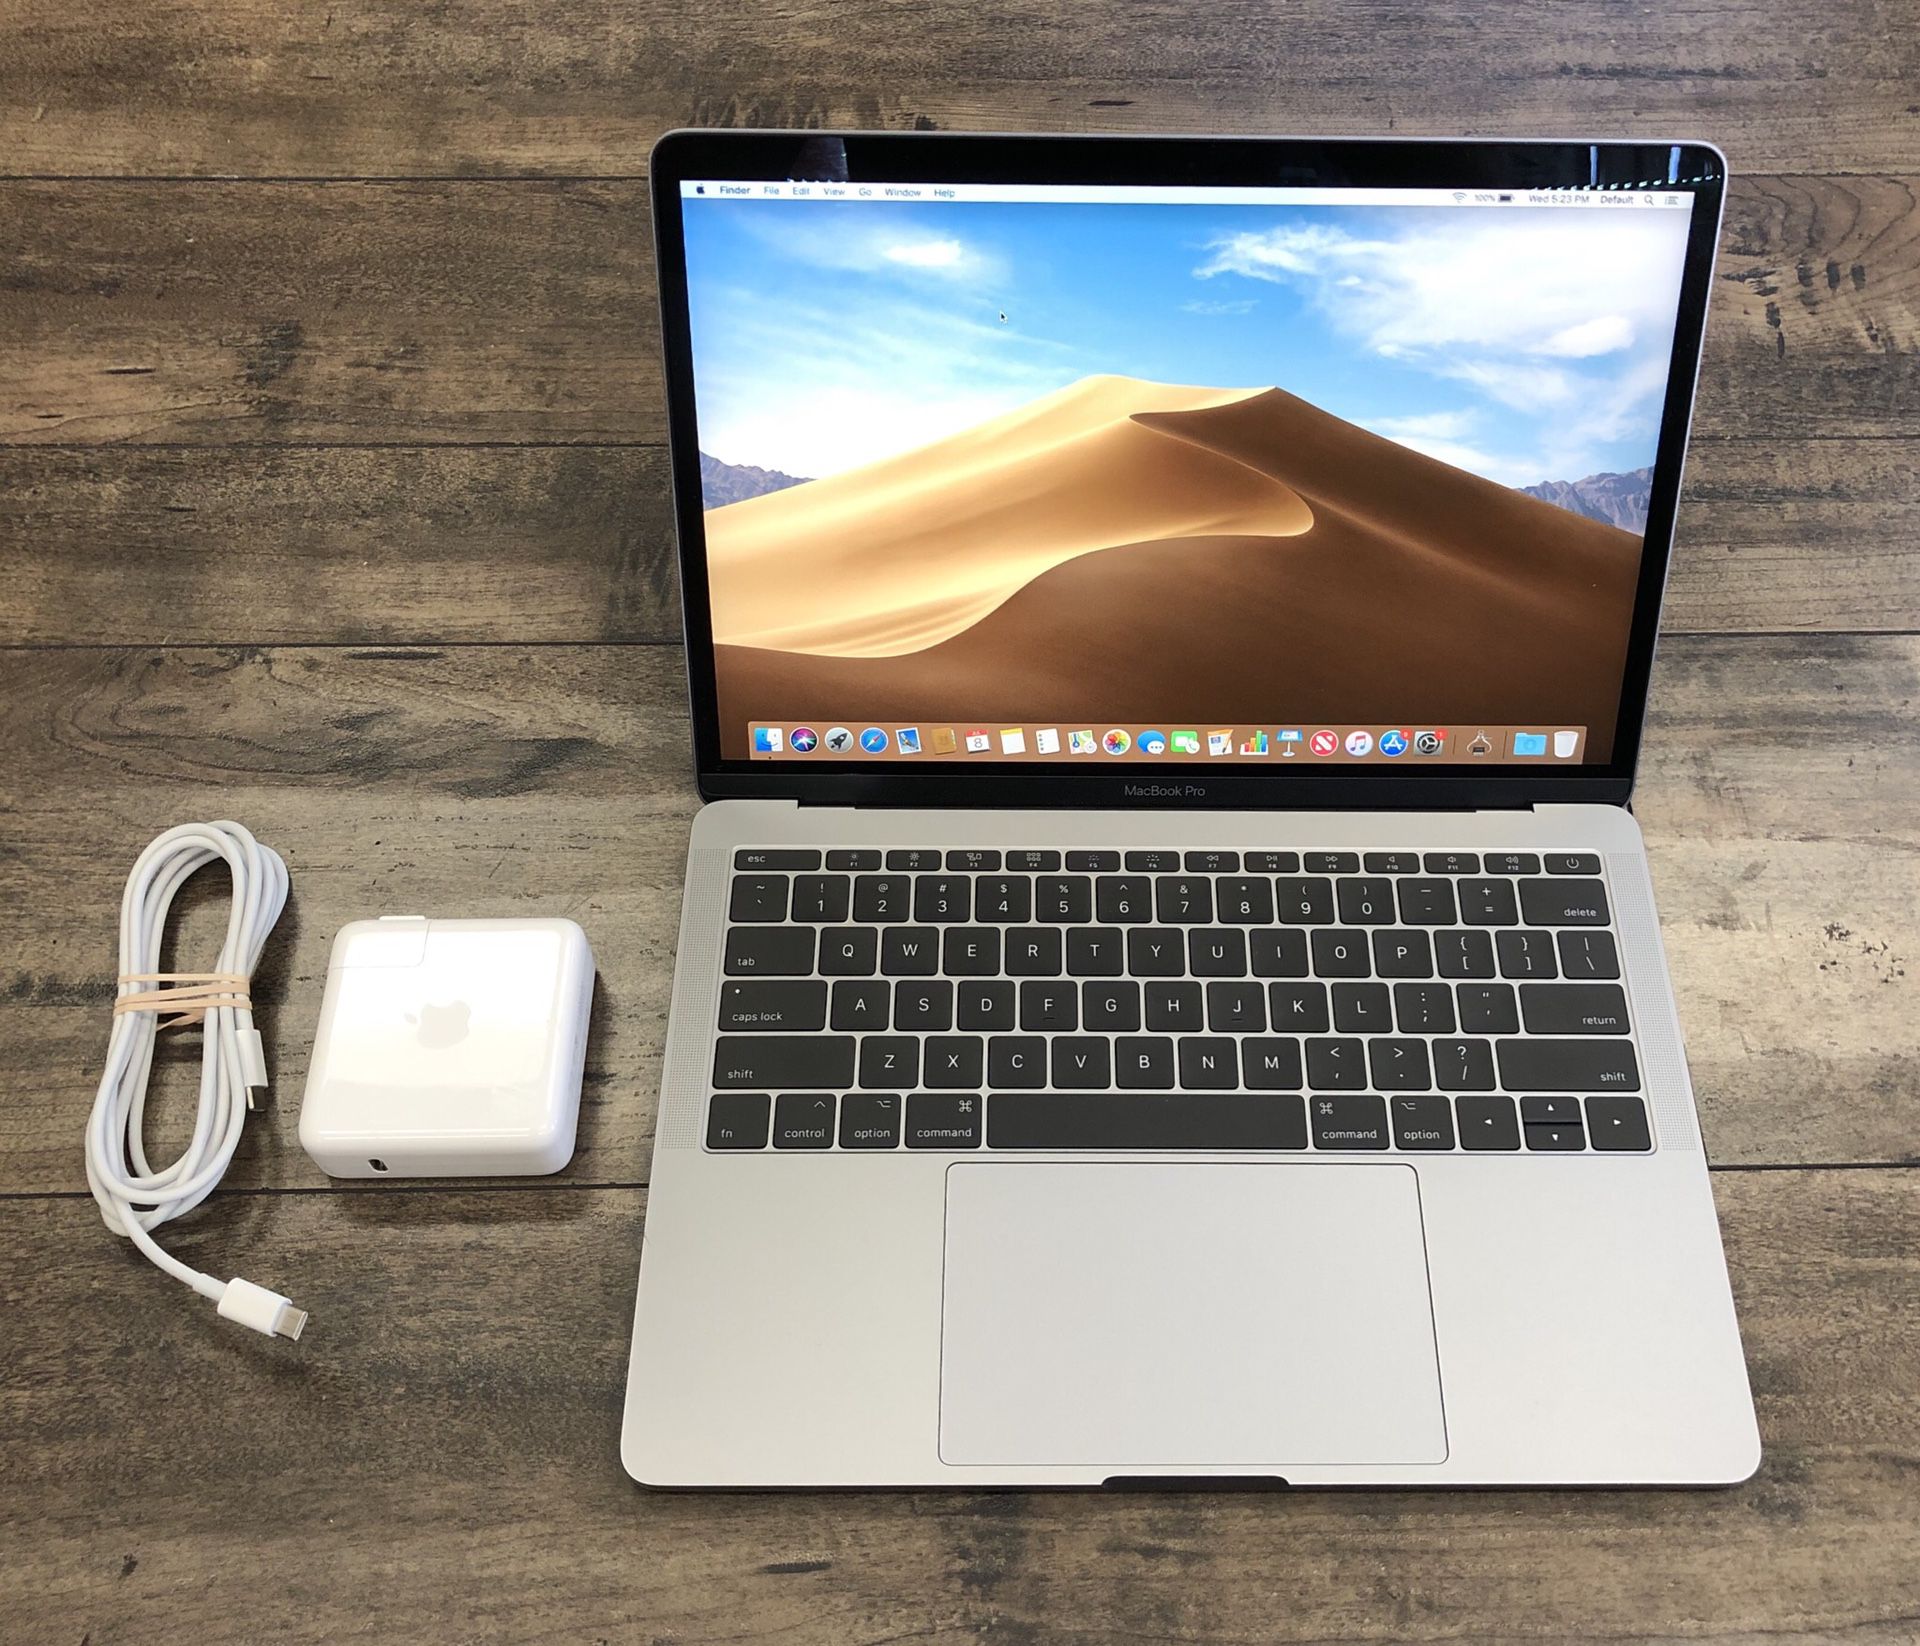 2017 Apple MacBook Pro 13” Intel Core i5, 8GB RAM, 128GB SSD Laptop Computer